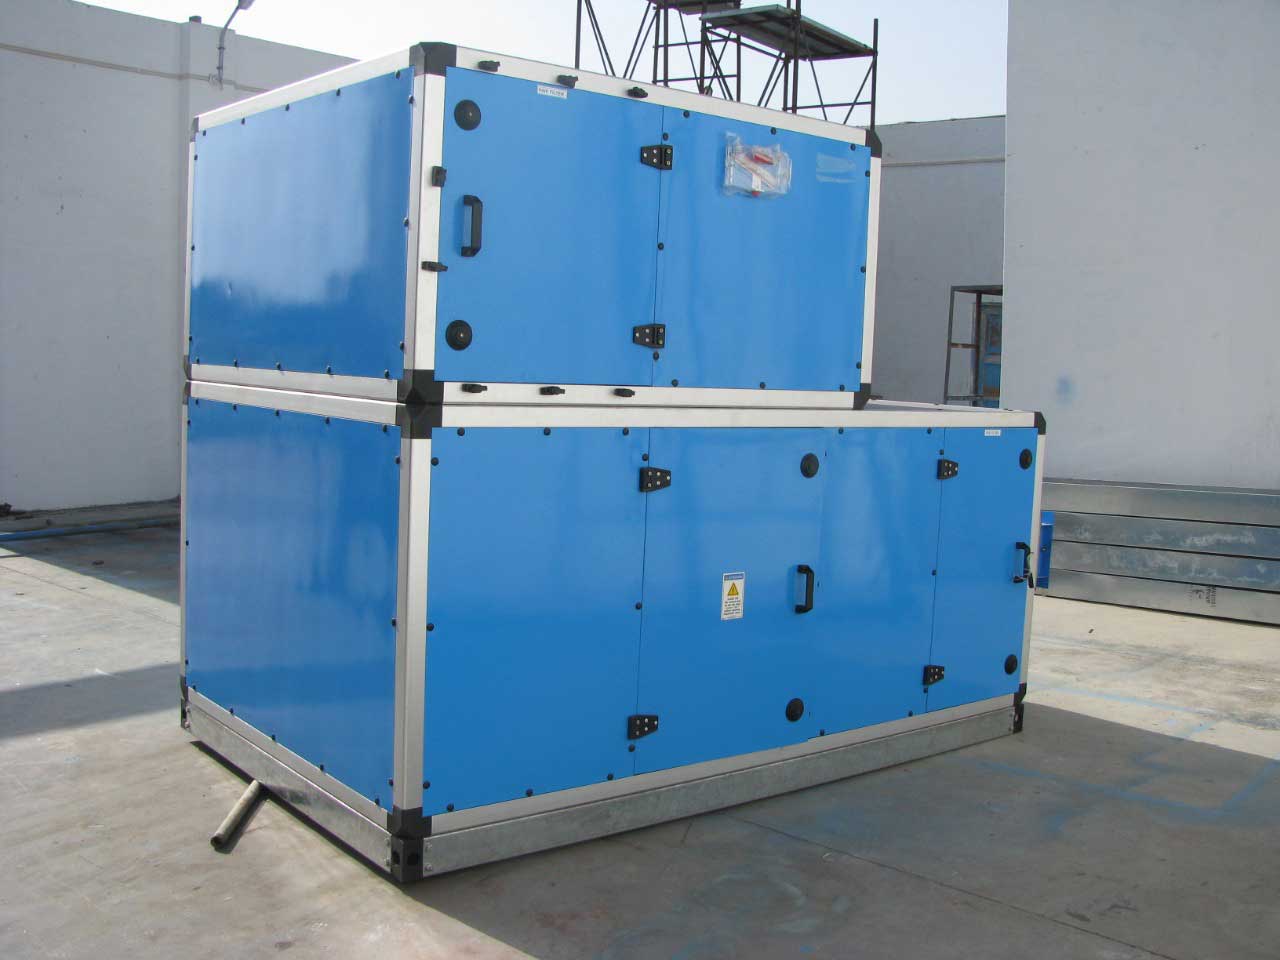 Heat recovery ventilator (HRV) Air Handling unit manufacturers